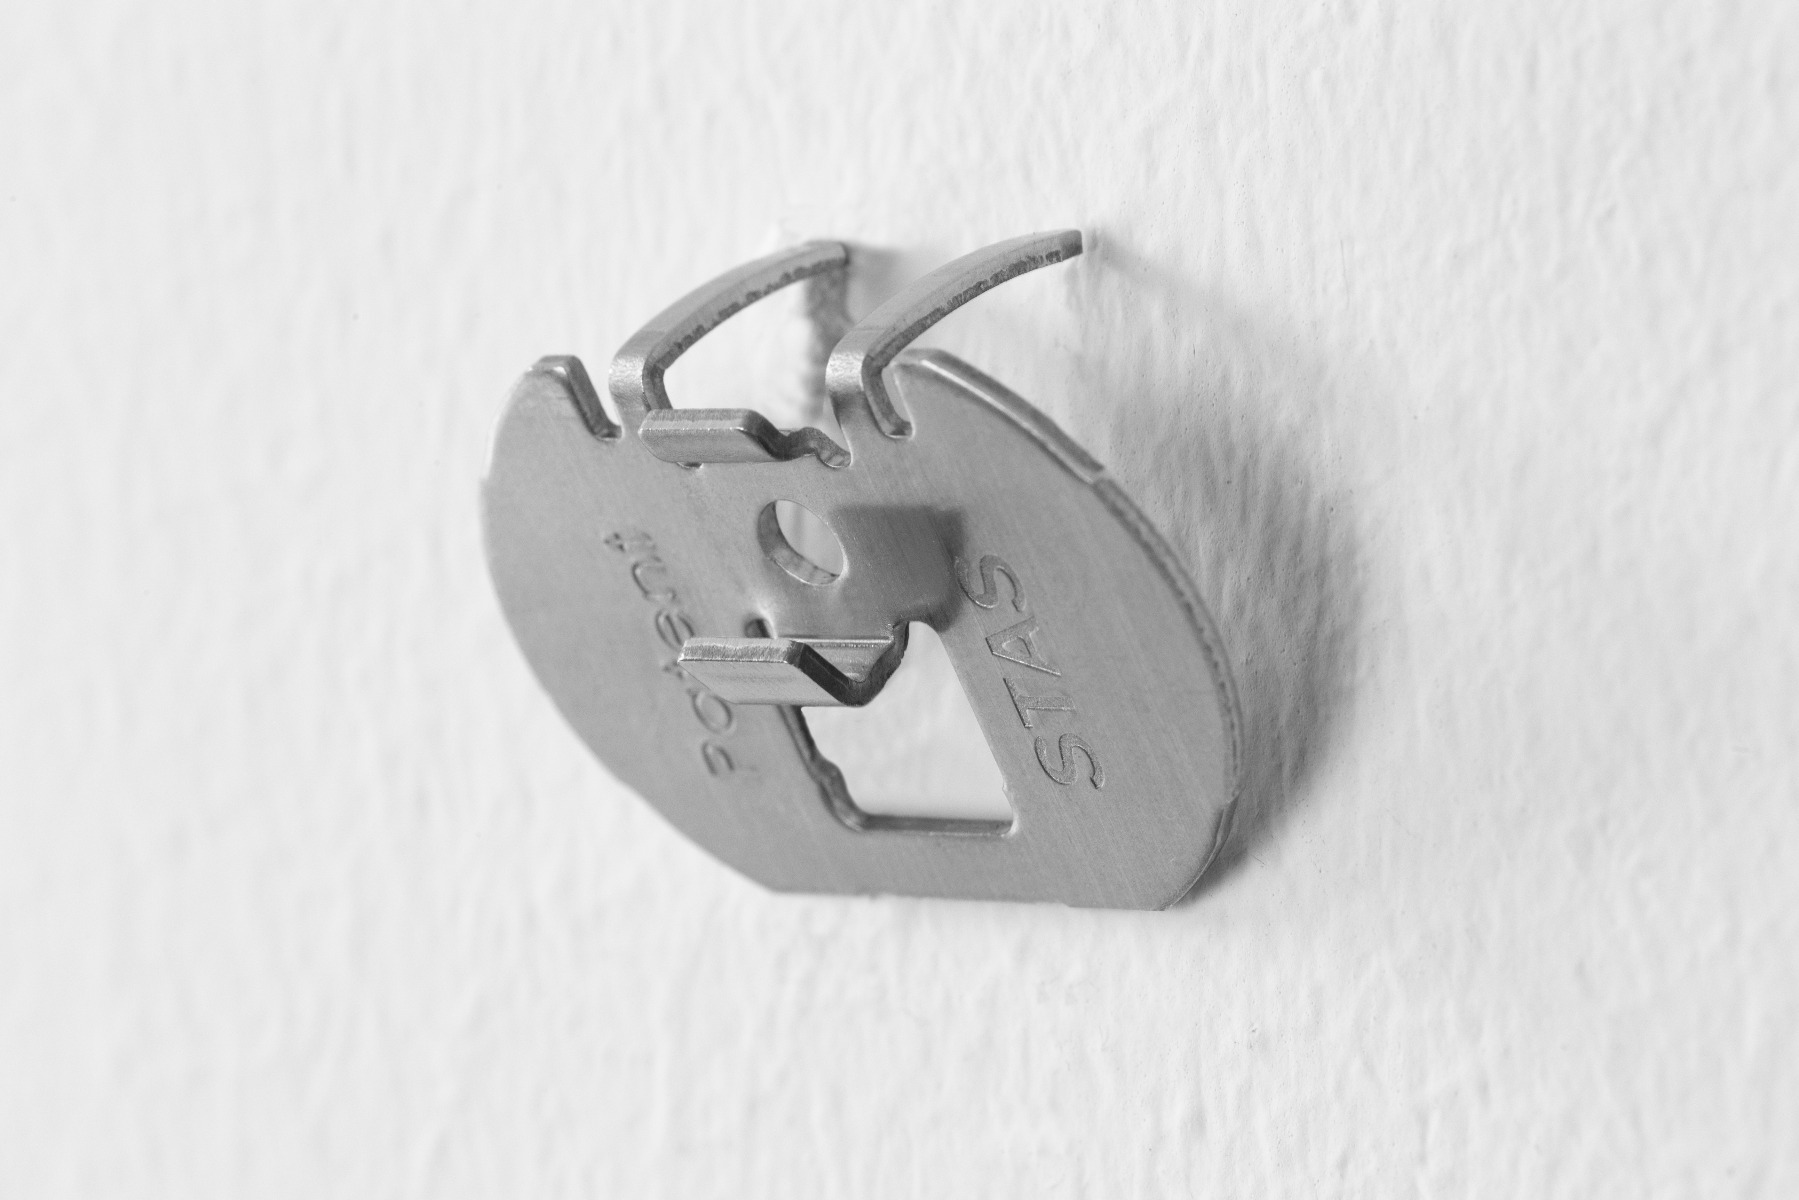 STAS drywall clip